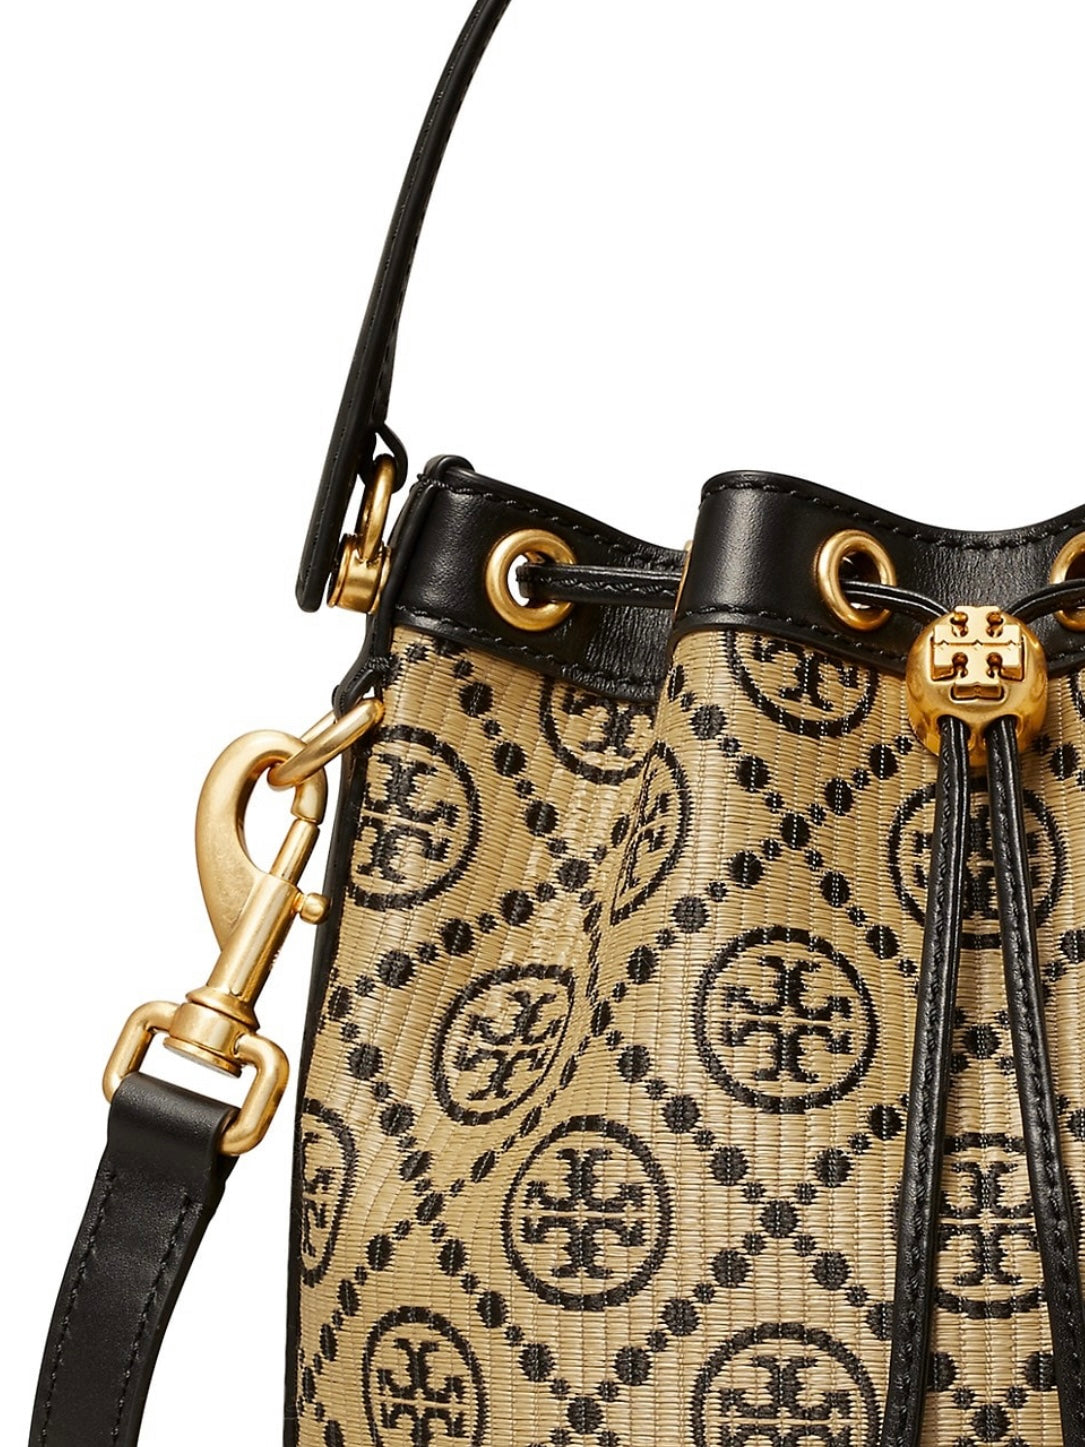 Tory Burch T Monogram Raffia Bucket Bag, Black/ Brass, Style 139129, Retail $598